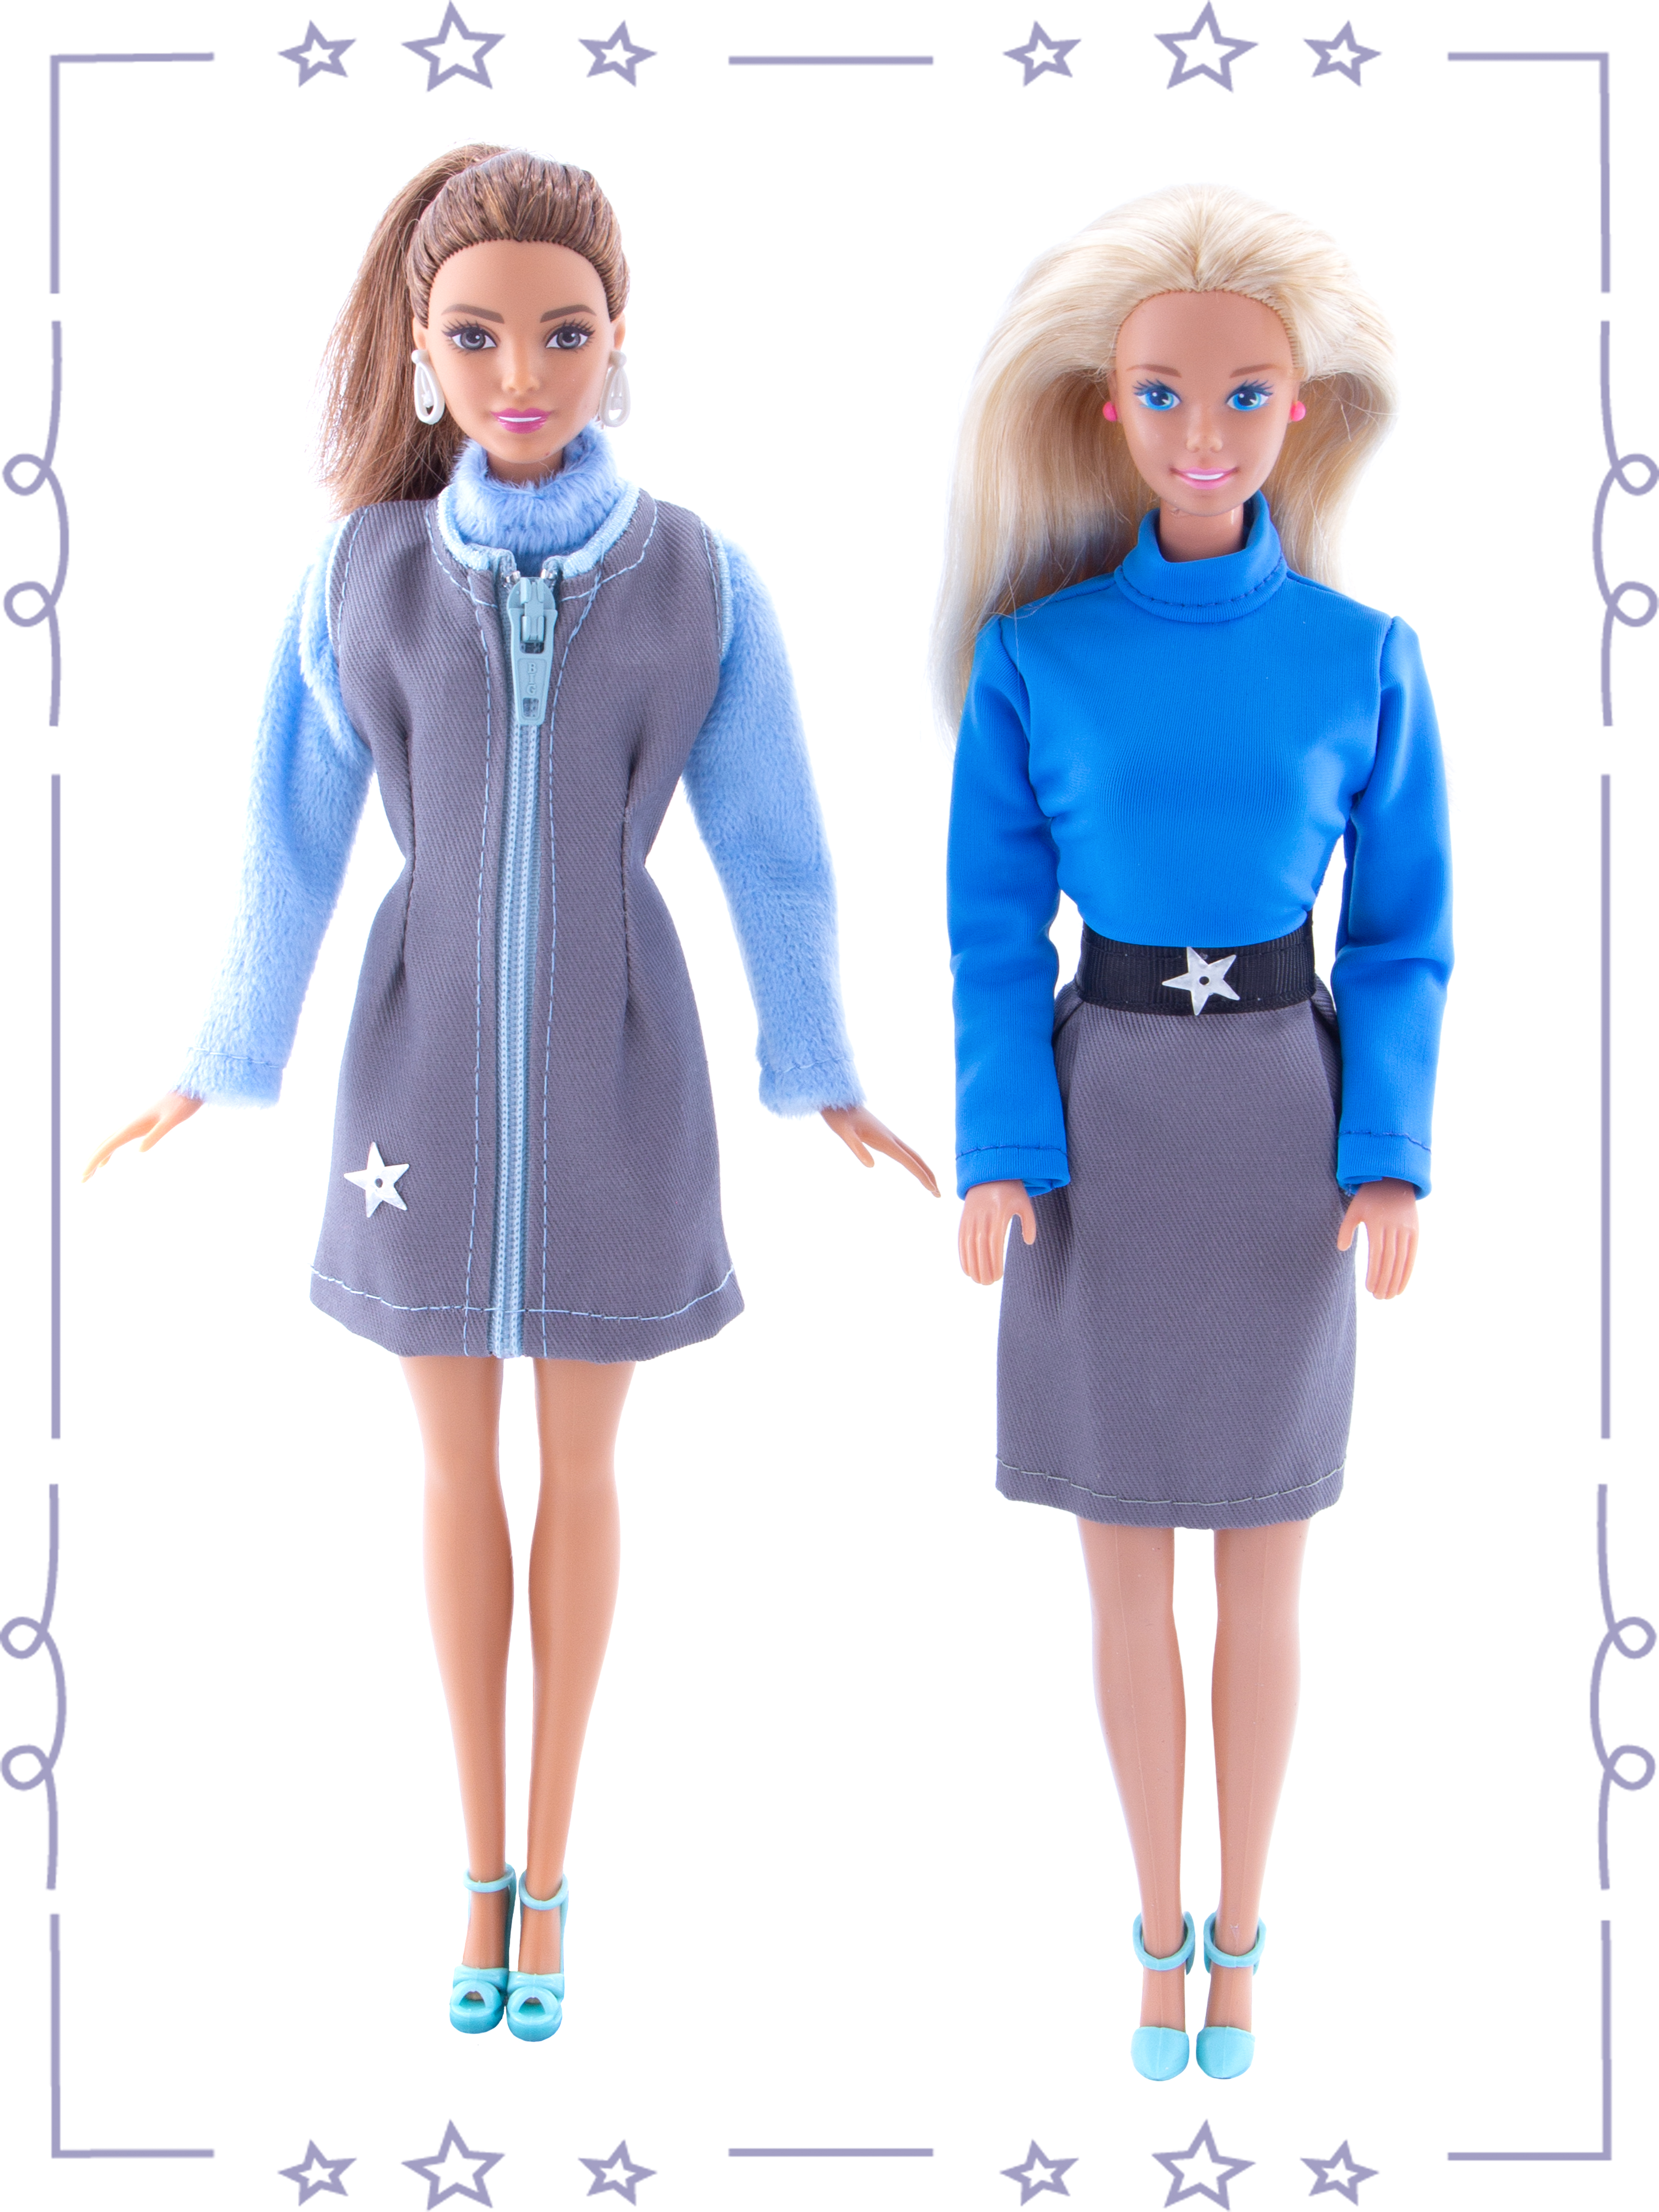 Набор одежды Модница для куклы 29 см: сарафан юбка 2 бадлона 2017серый - фото 1